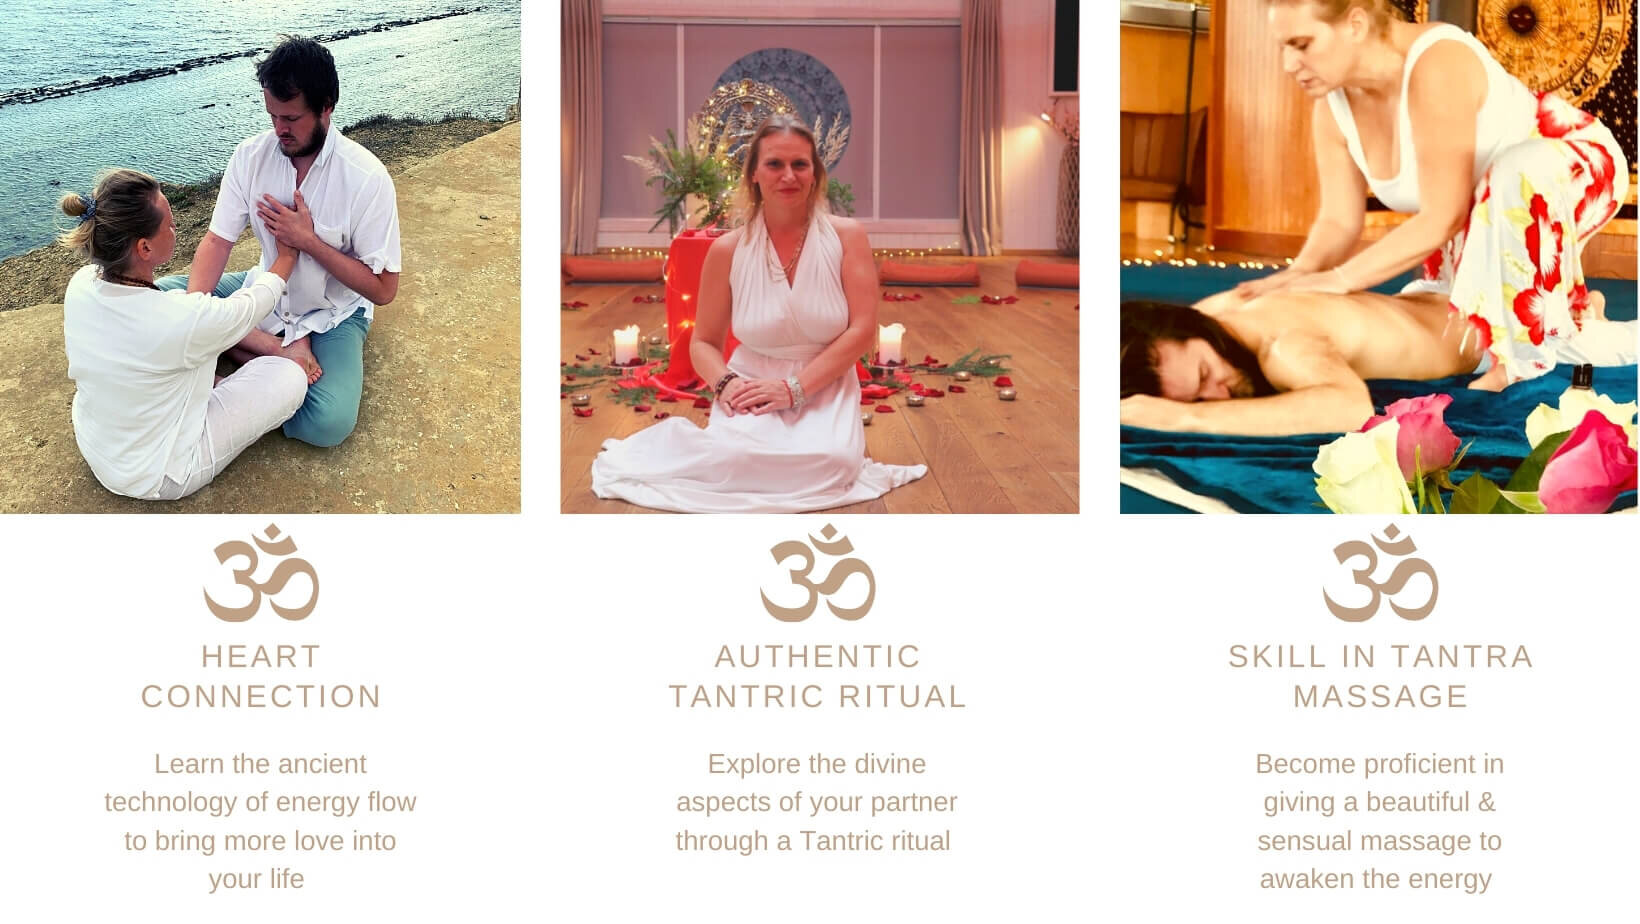 Tantra ritual massage